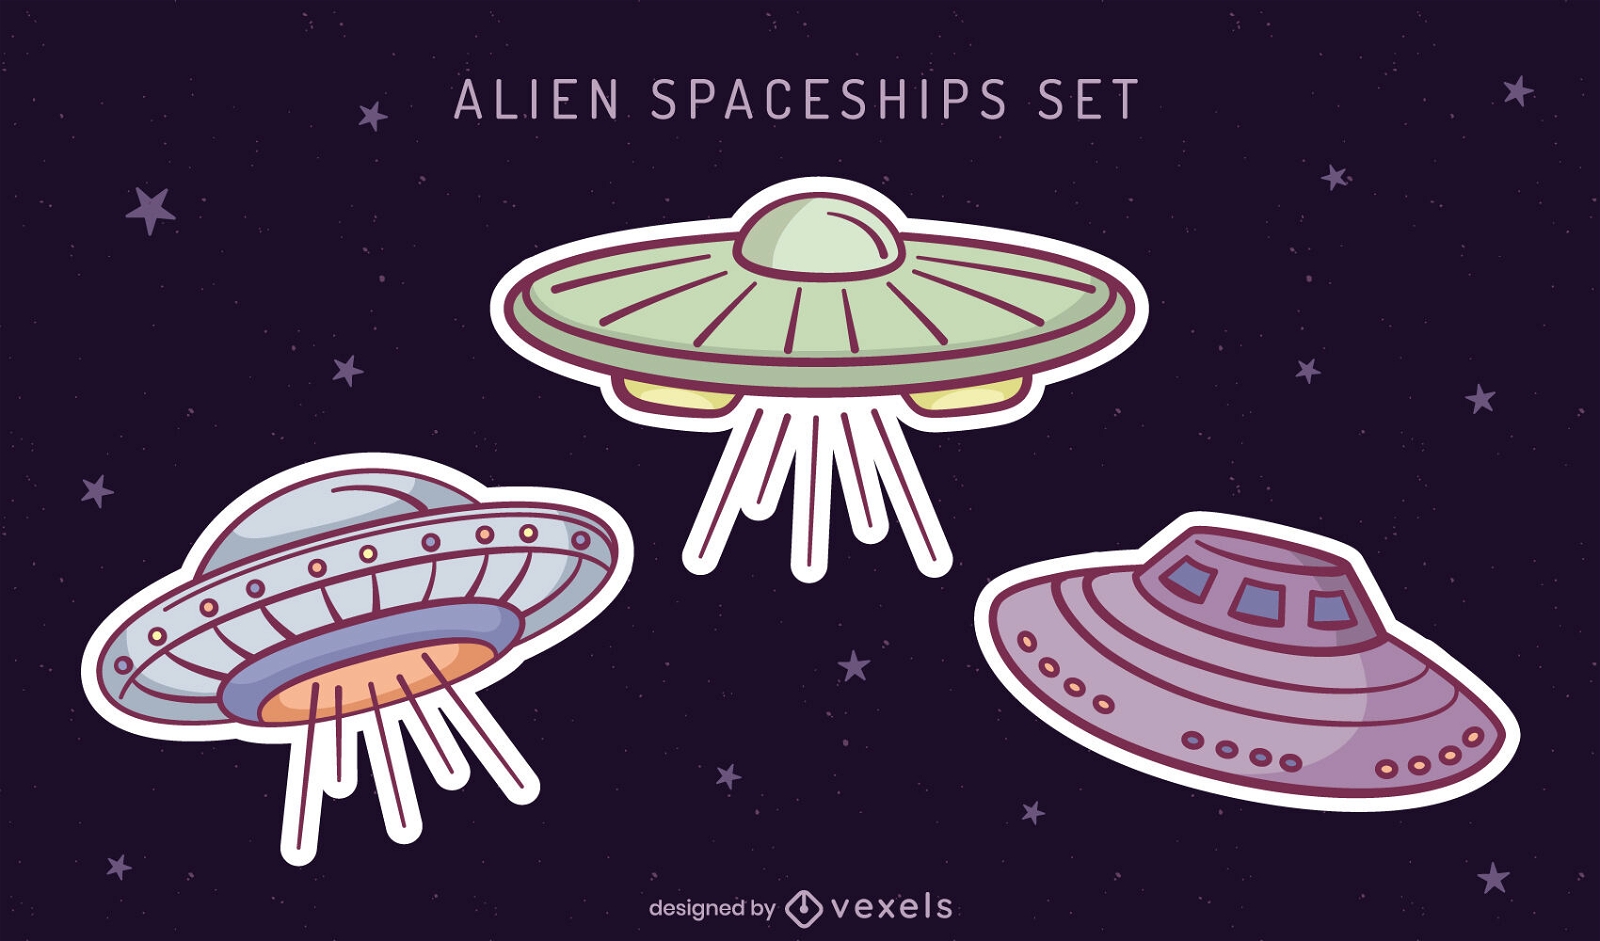 Alien spaceship in space stickers set